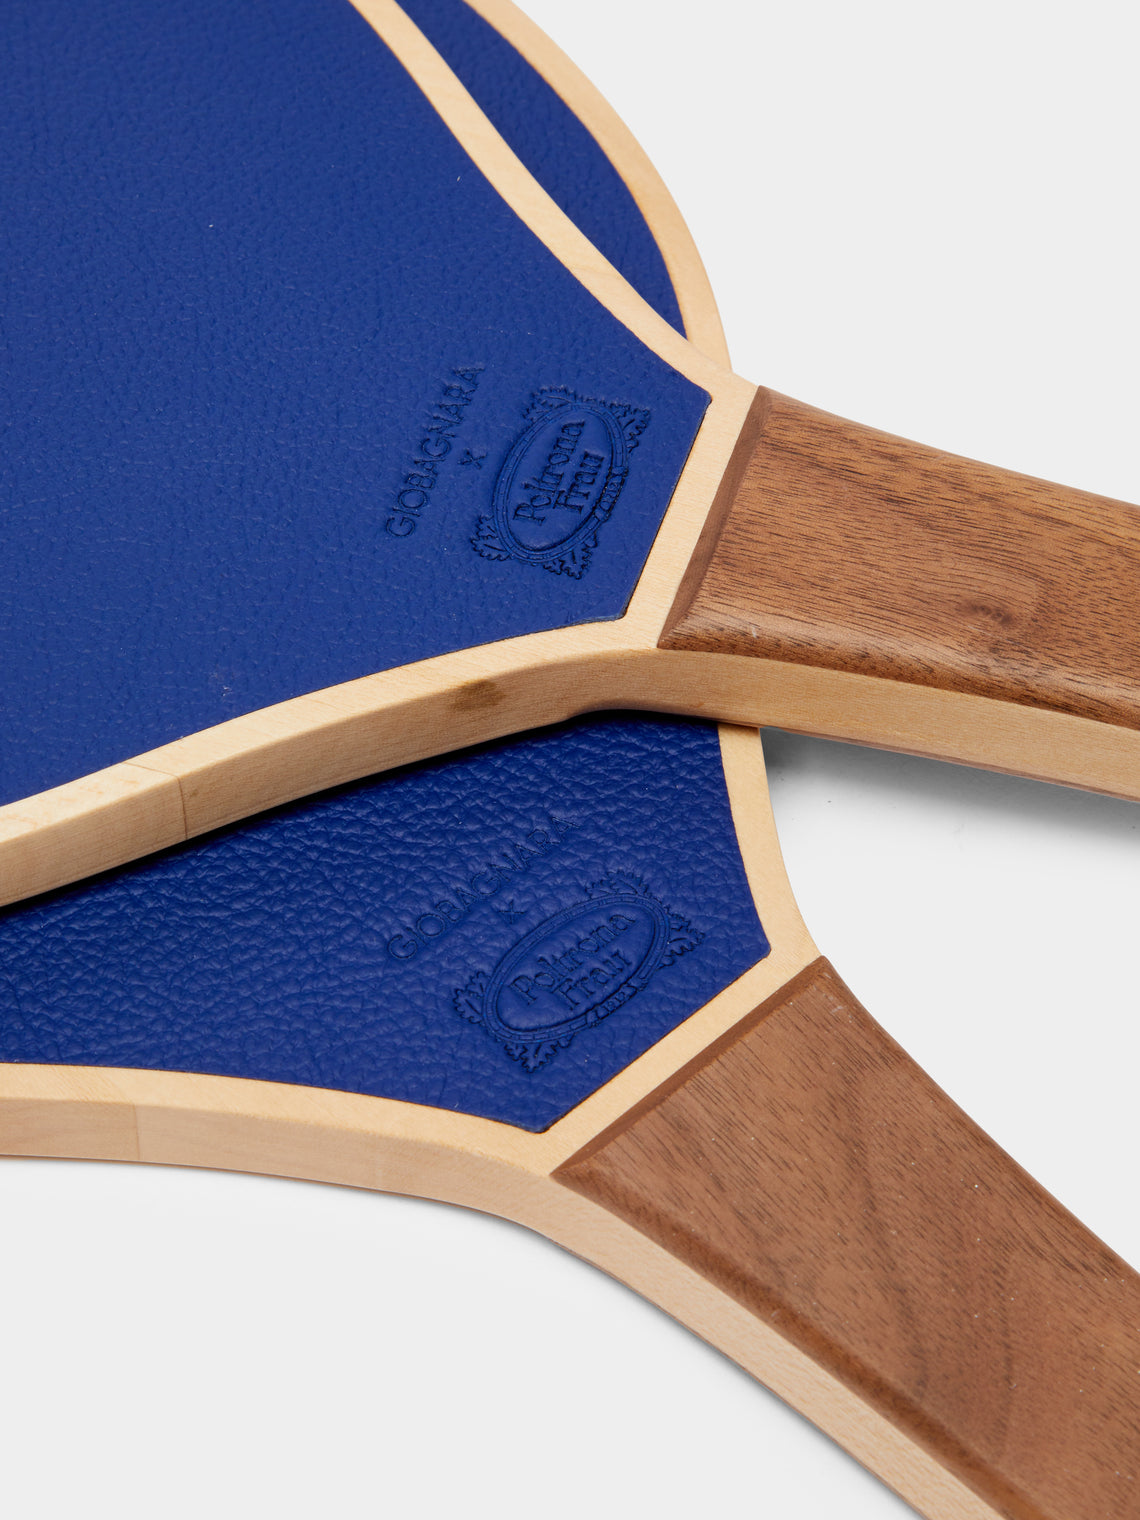 Giobagnara x Poltrona Frau - Leather, Maple and Walnut Rackets with Ball -  - ABASK